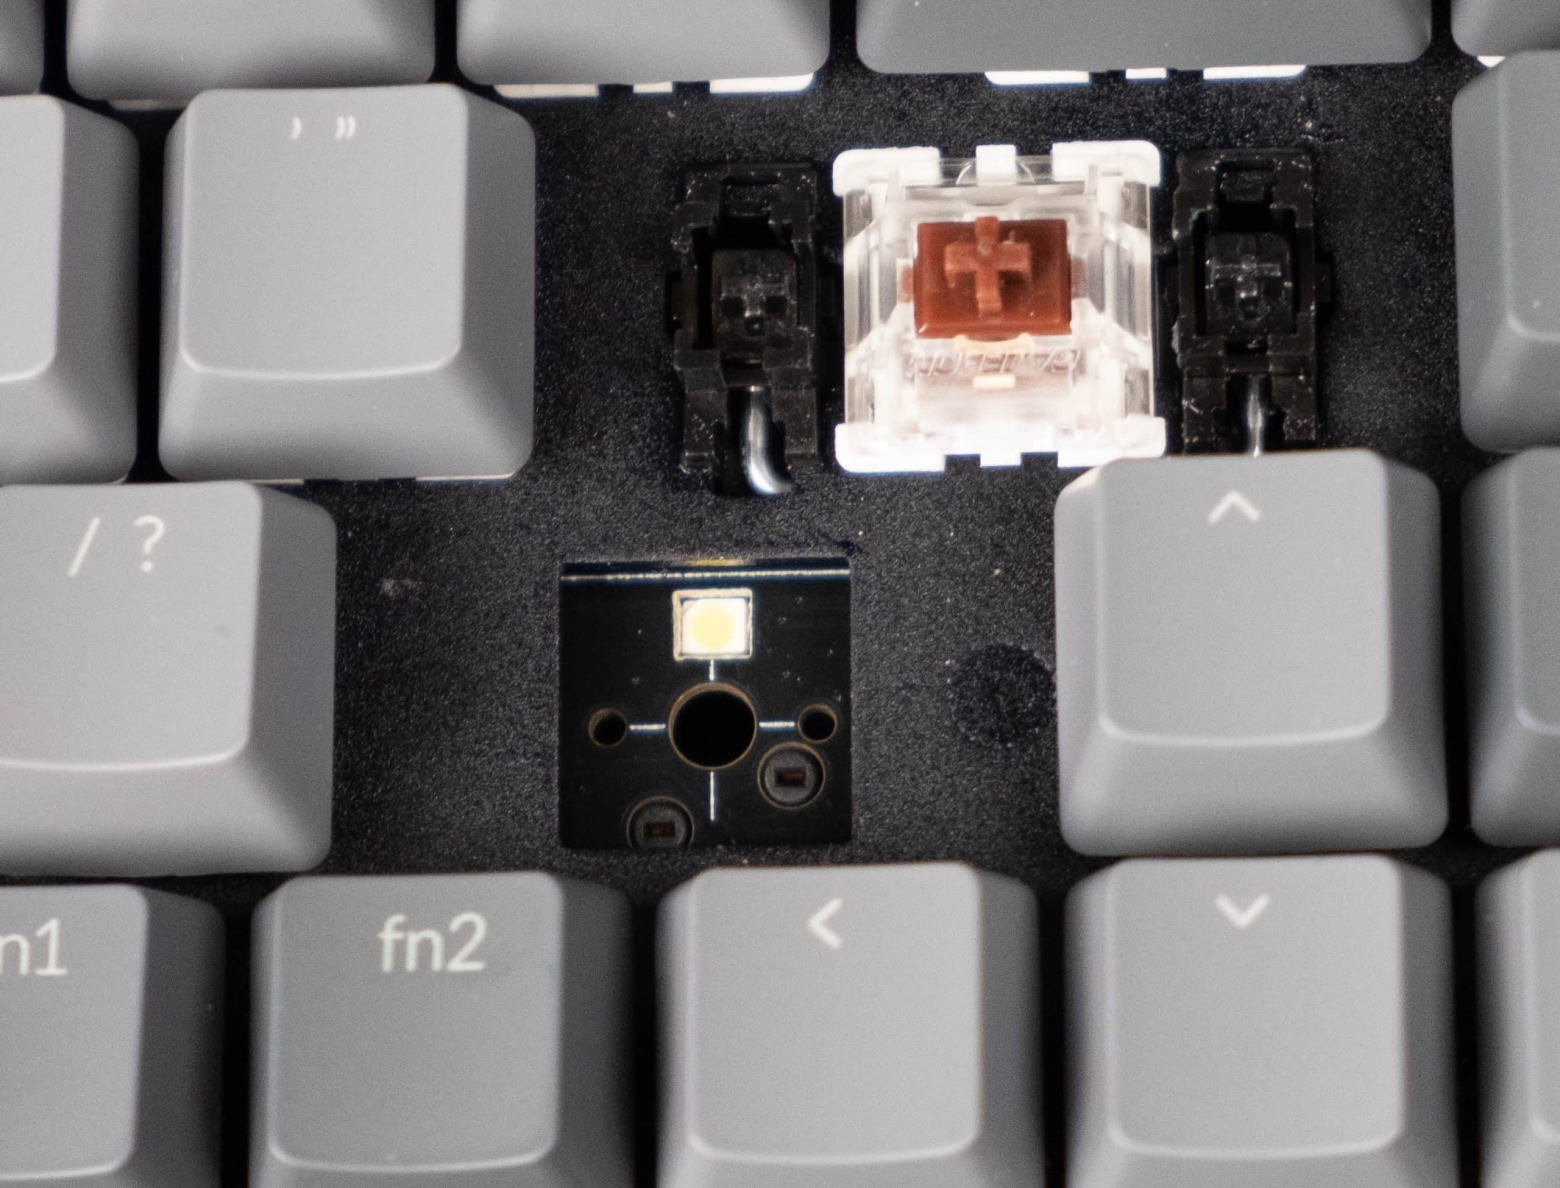 Как настроить клавиши Fn? — Хабр Q&A